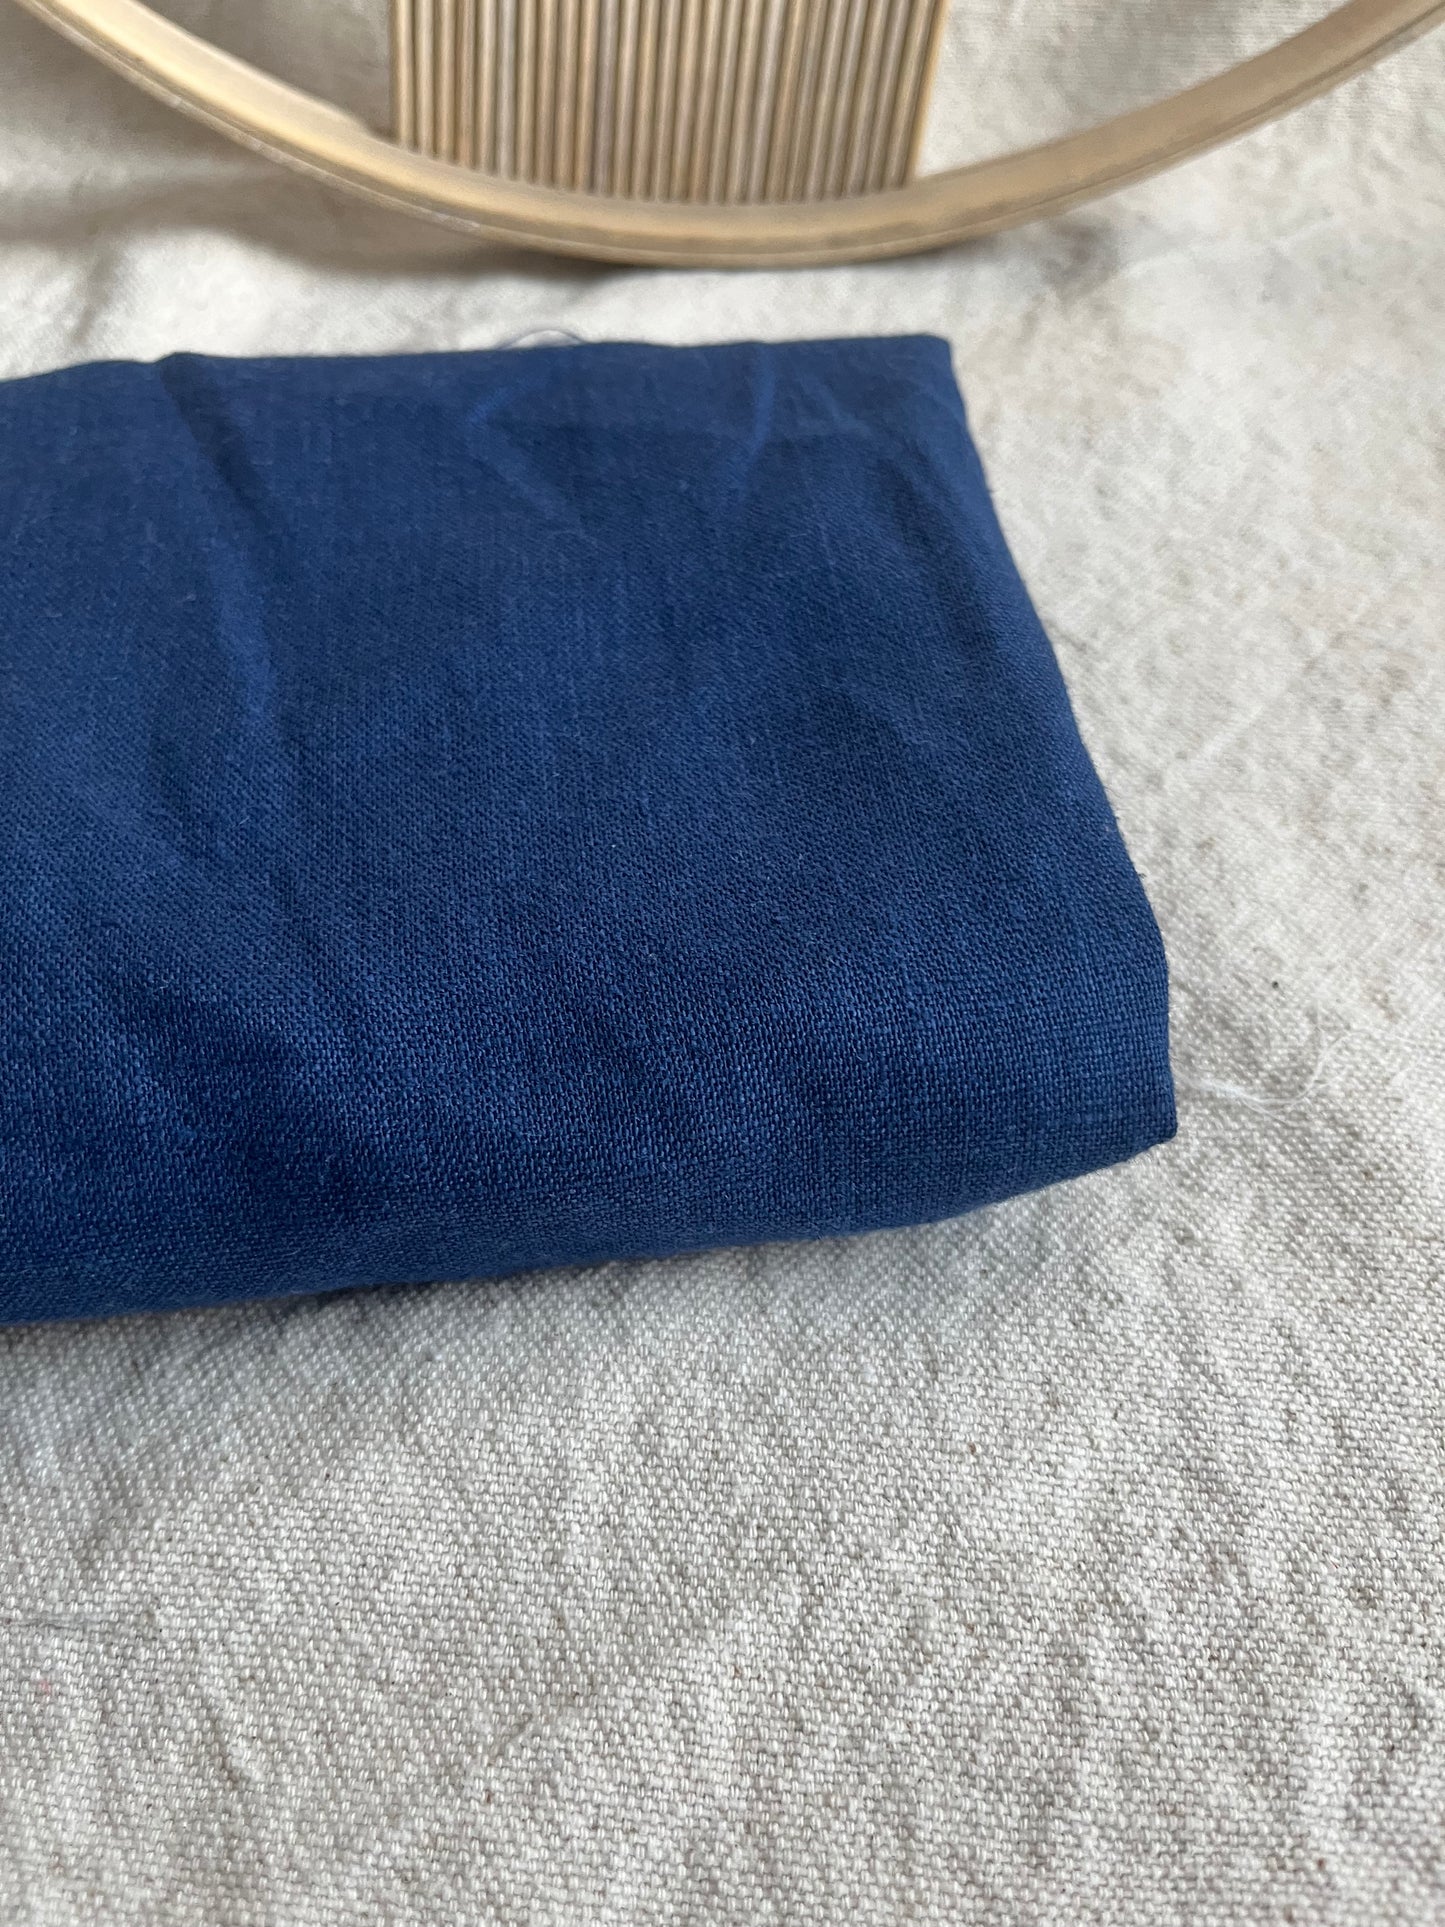 Medium Weight European Laundered Linen  (sold by the half yard)